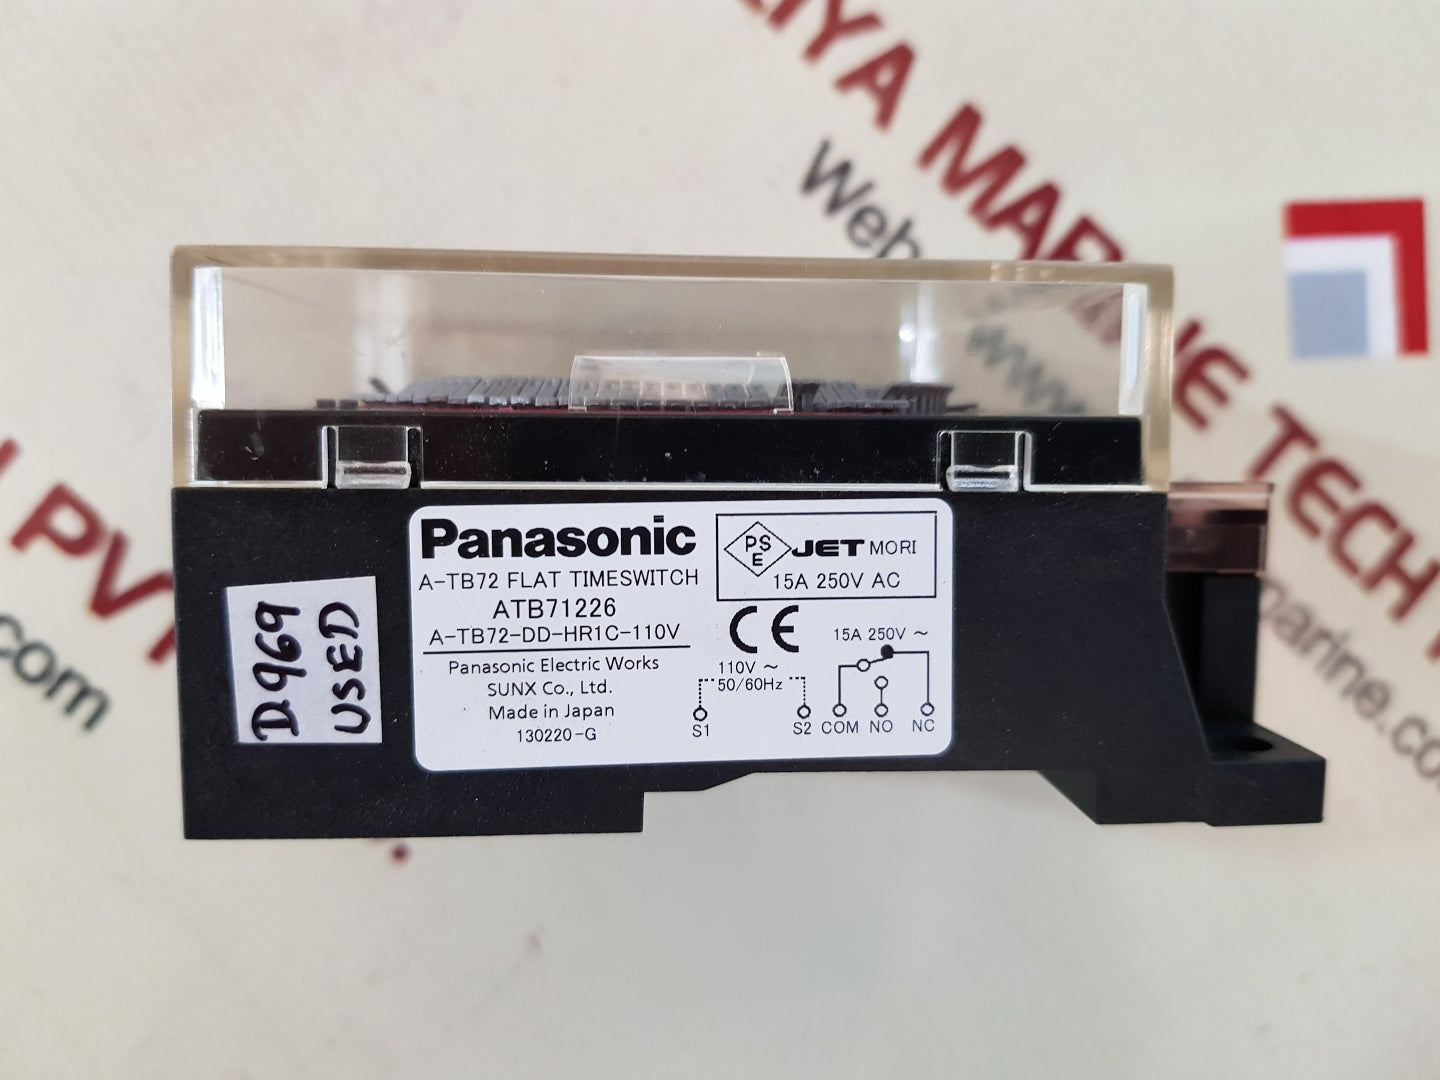 Panasonic a-tb72 flat timeswitch a-tb72-dd-hr1c-110v